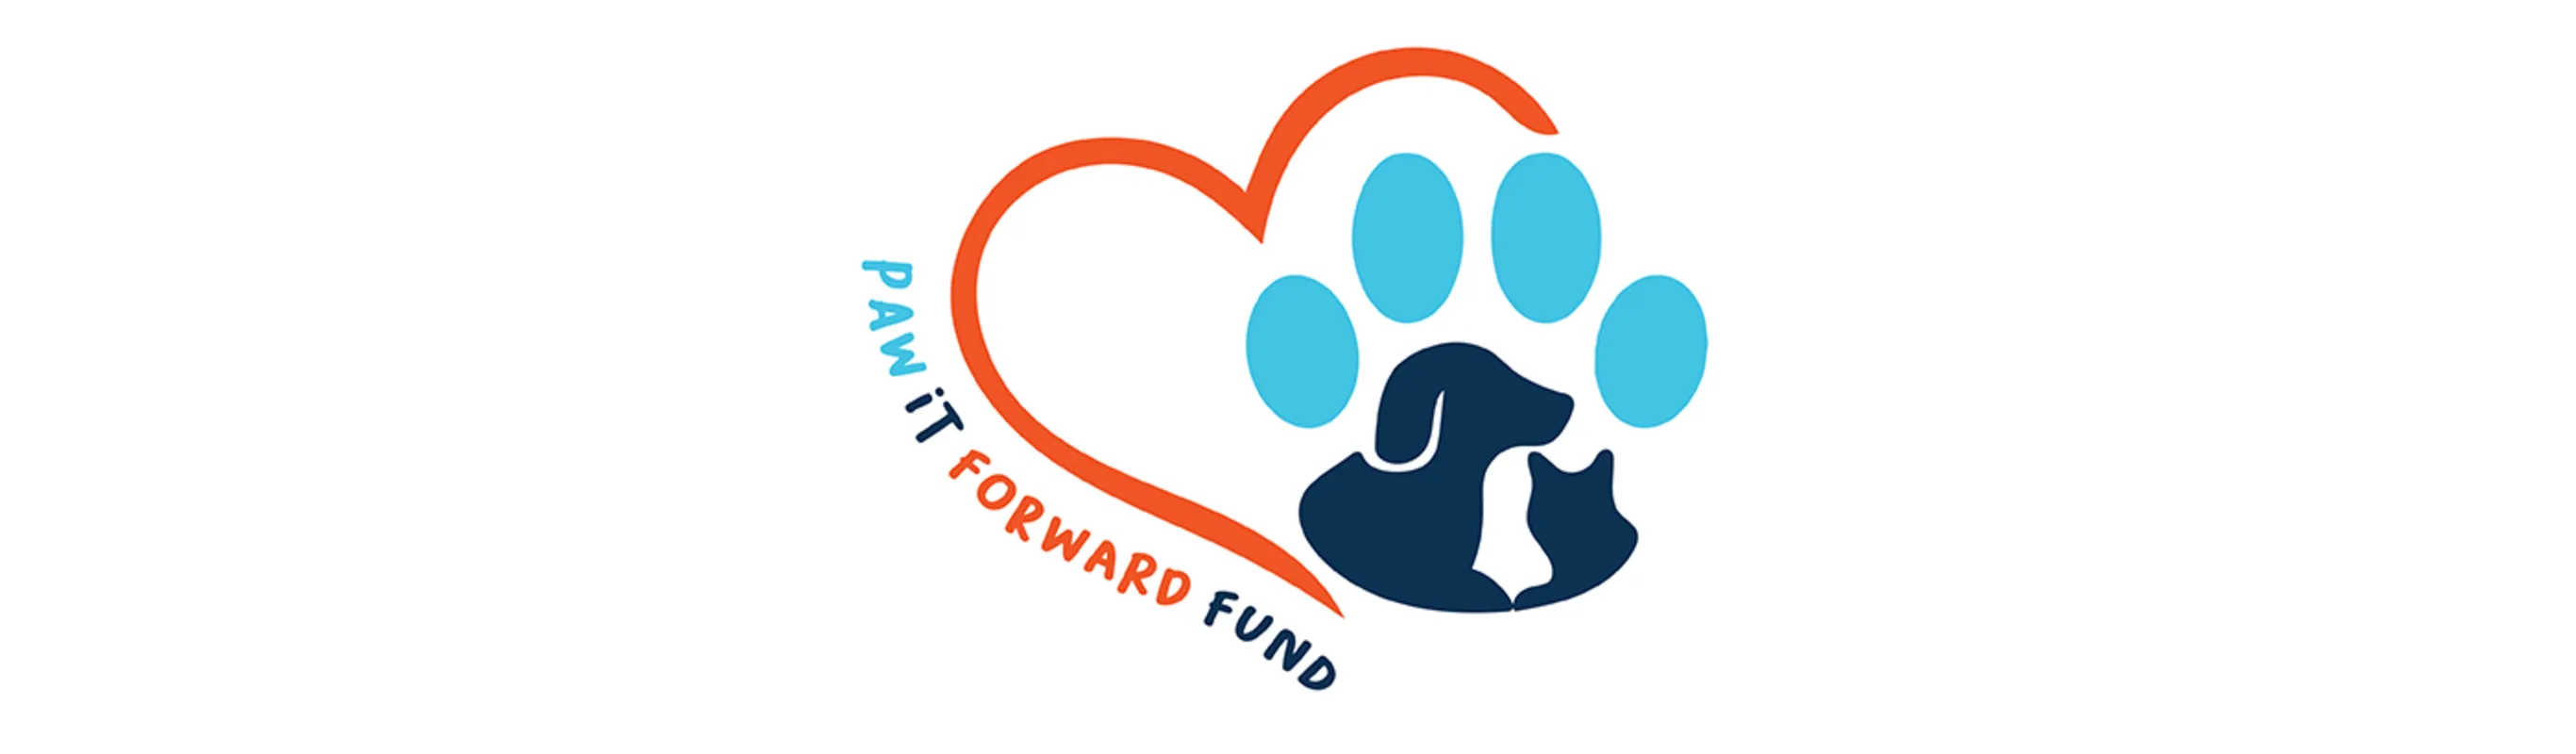 The Paw it Forward logo